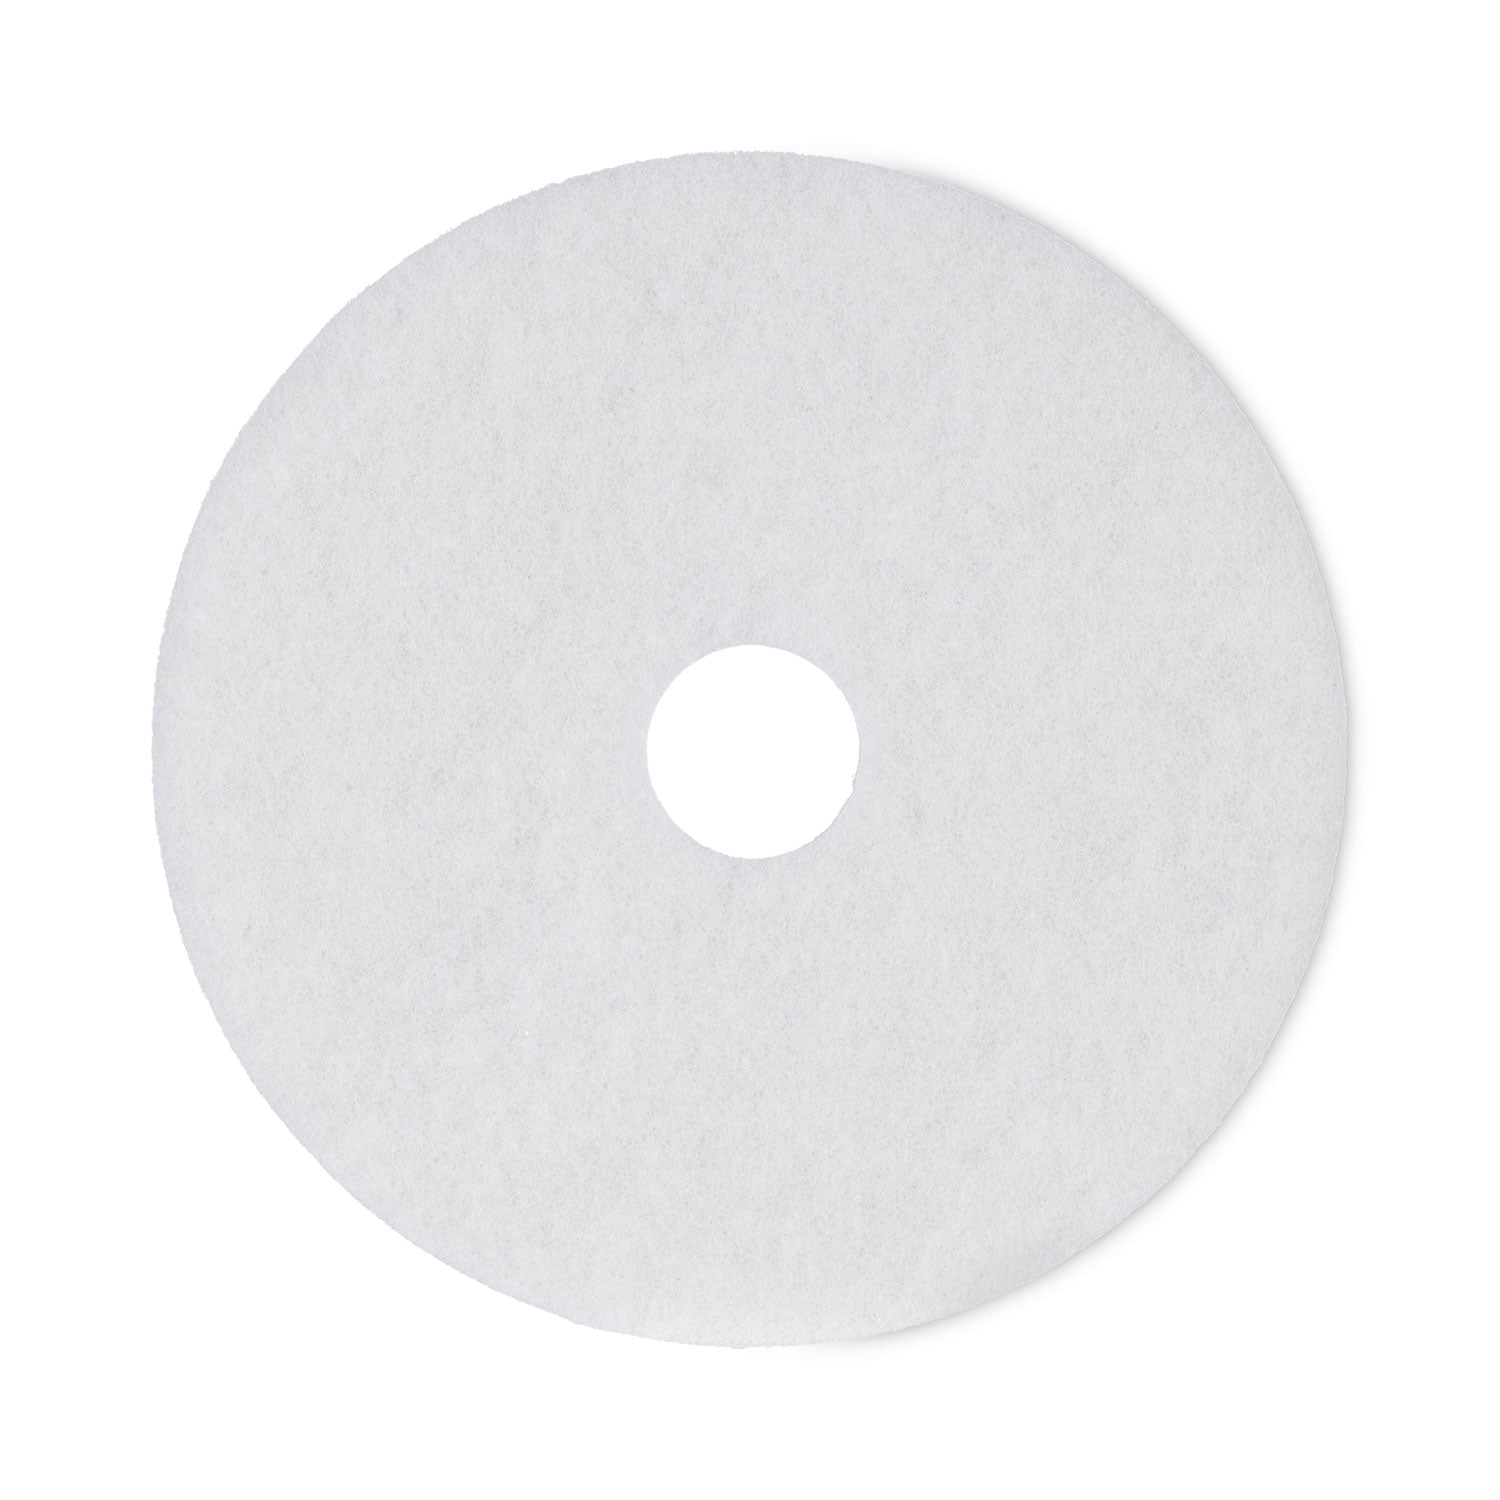 polishing-floor-pads-18-diameter-white-5-carton_bwk4018whi - 1